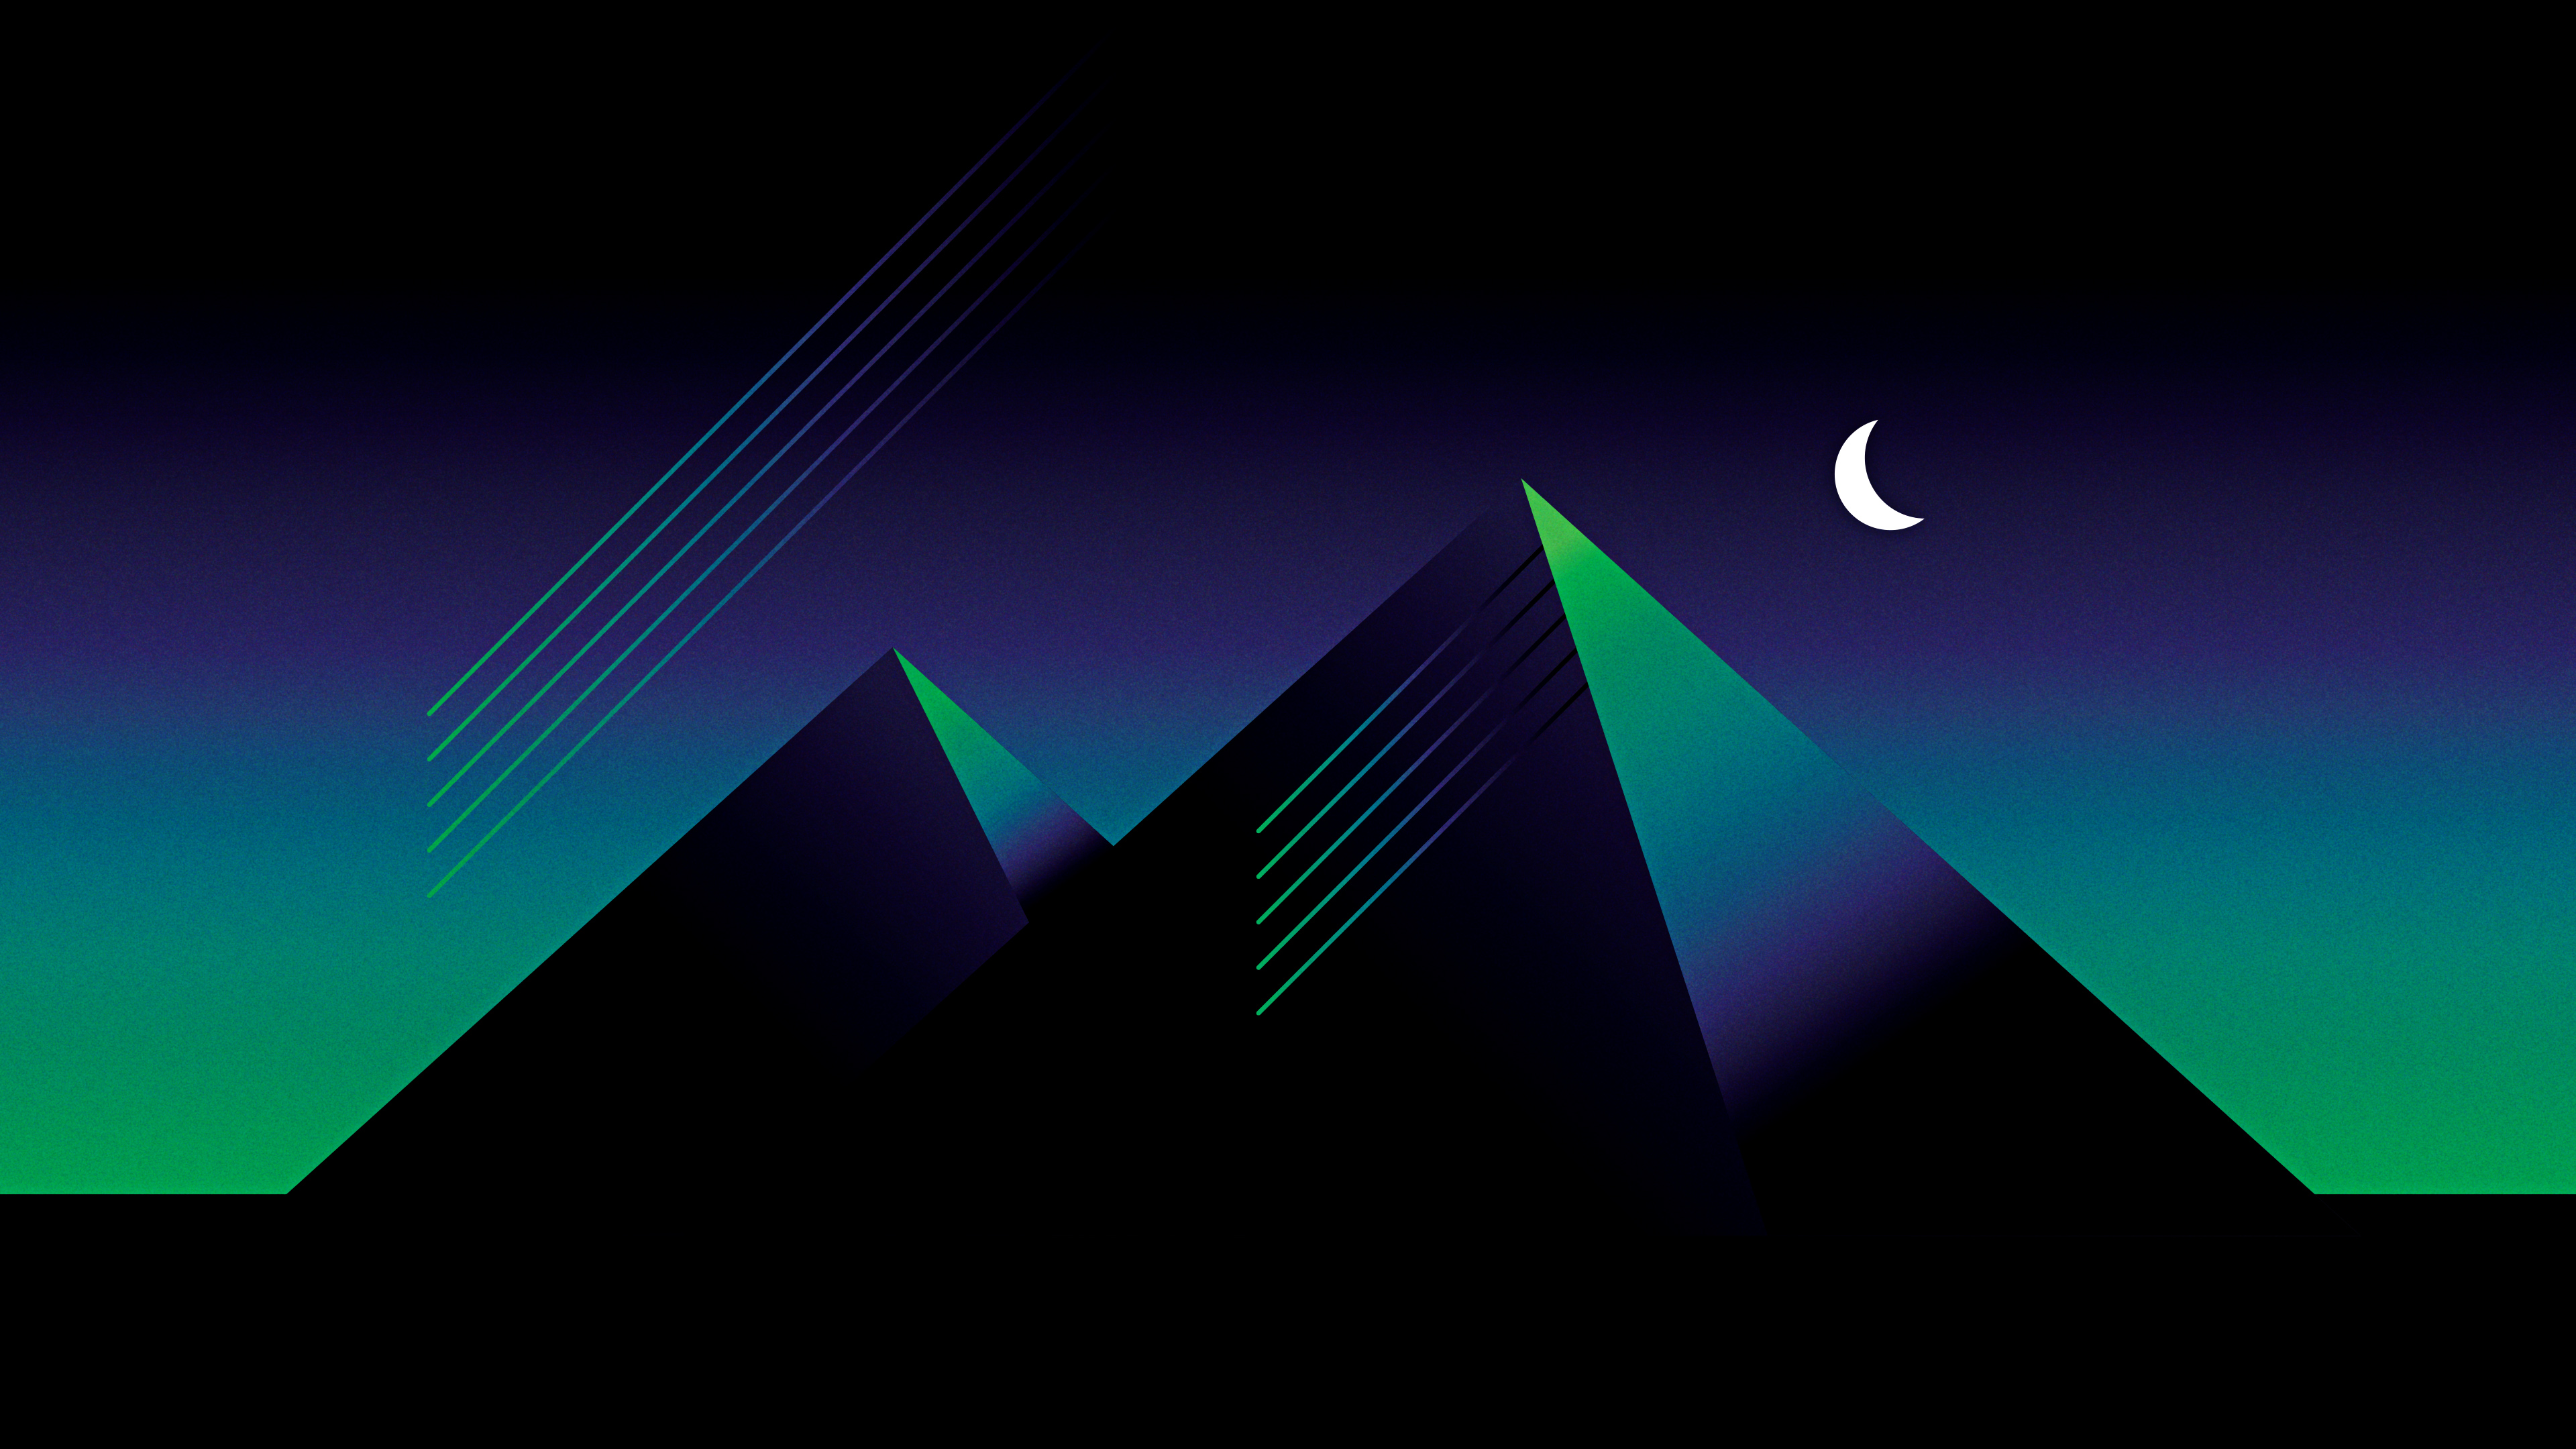 Digital Digital Art Artwork Illustration Colorful Moon Moon Phases Lines Pyramid Dark Dusk Glowing G 3840x2160